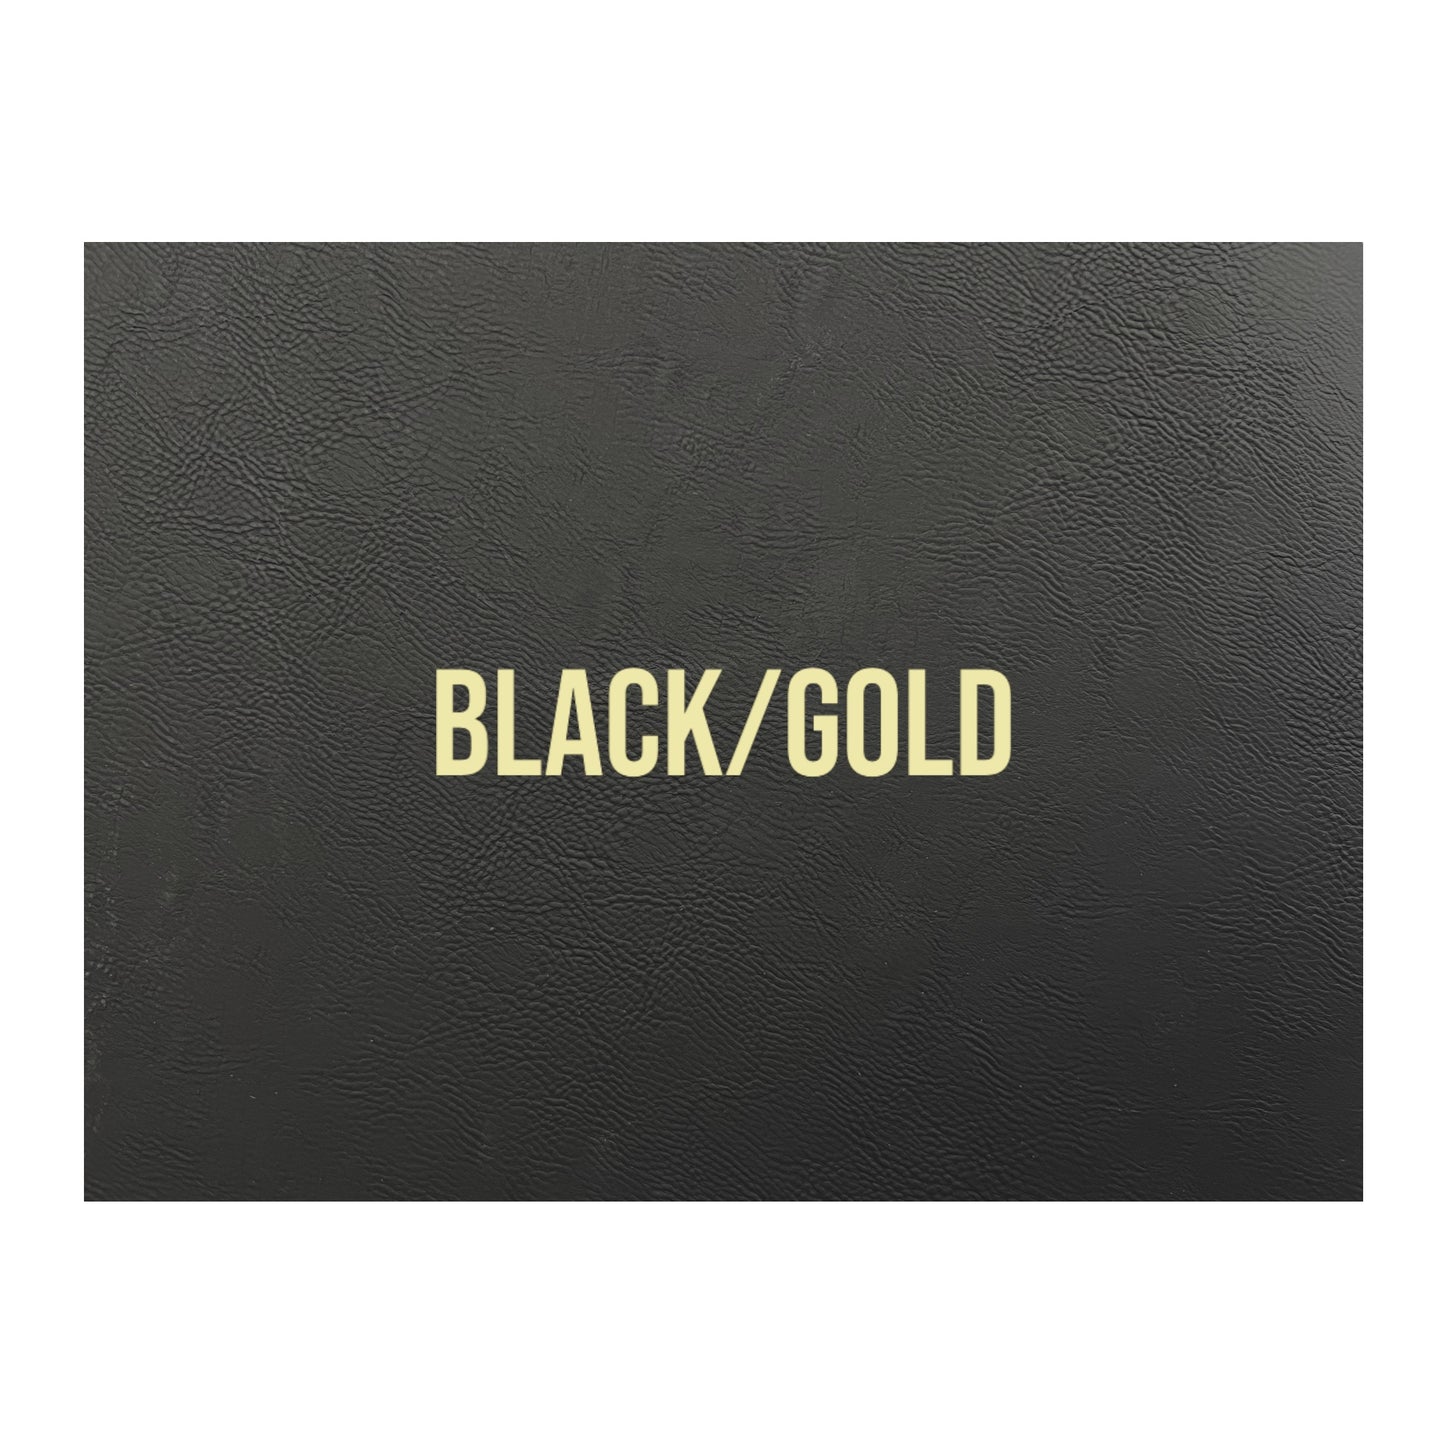 BLACK/GOLD HYDBOND’D LEATHERETTE SHEET (12"x24")